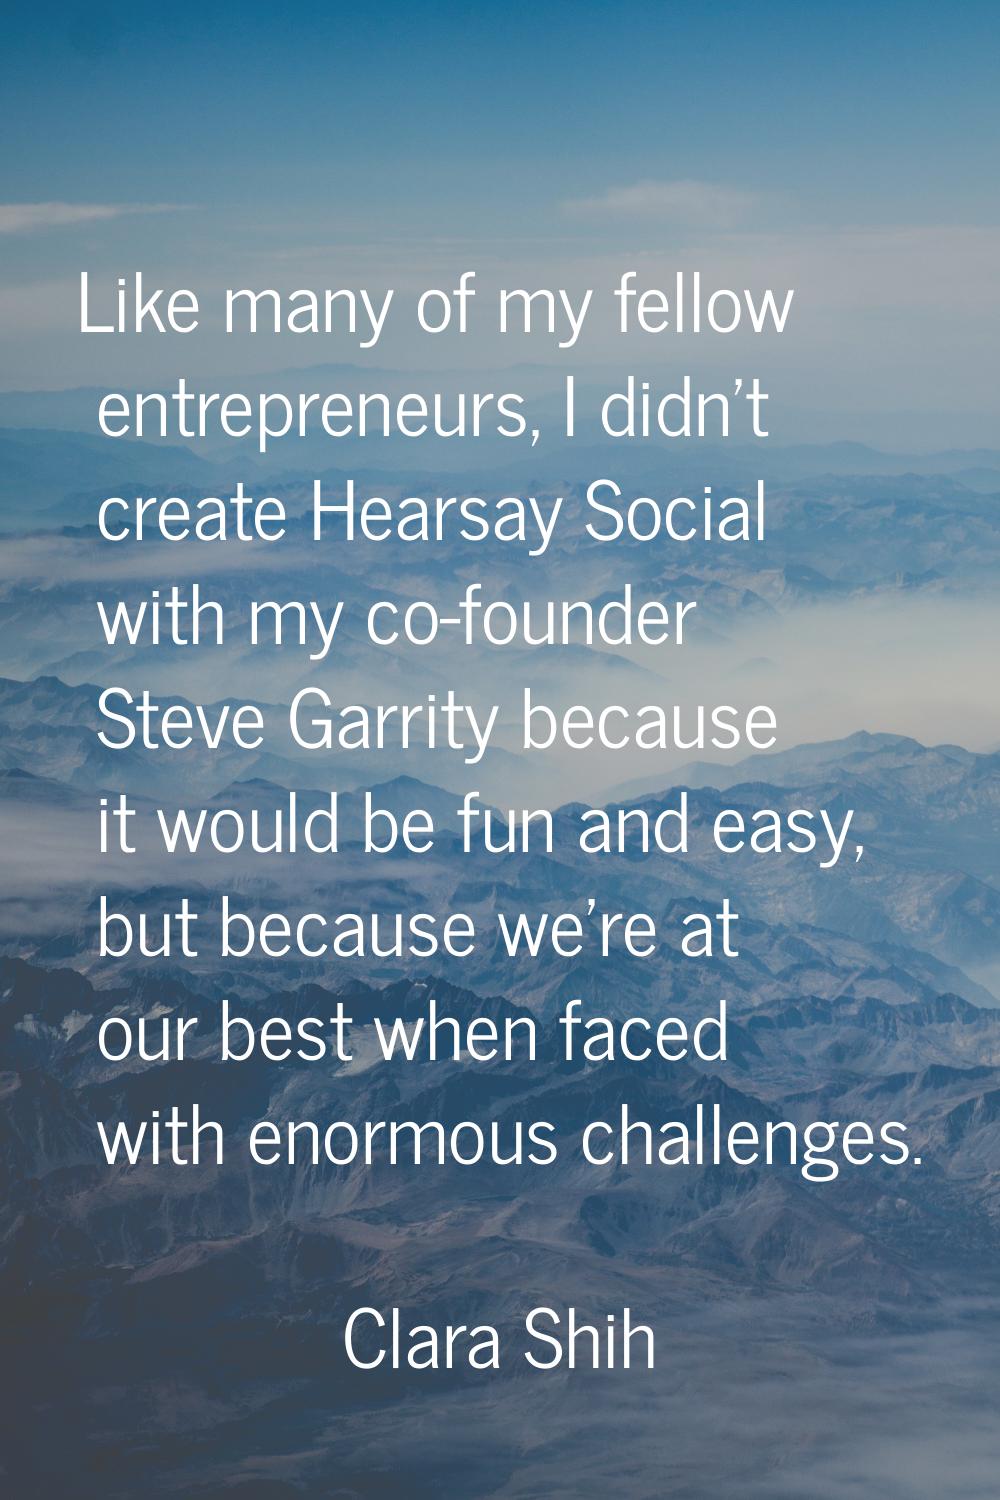 Like many of my fellow entrepreneurs, I didn't create Hearsay Social with my co-founder Steve Garri